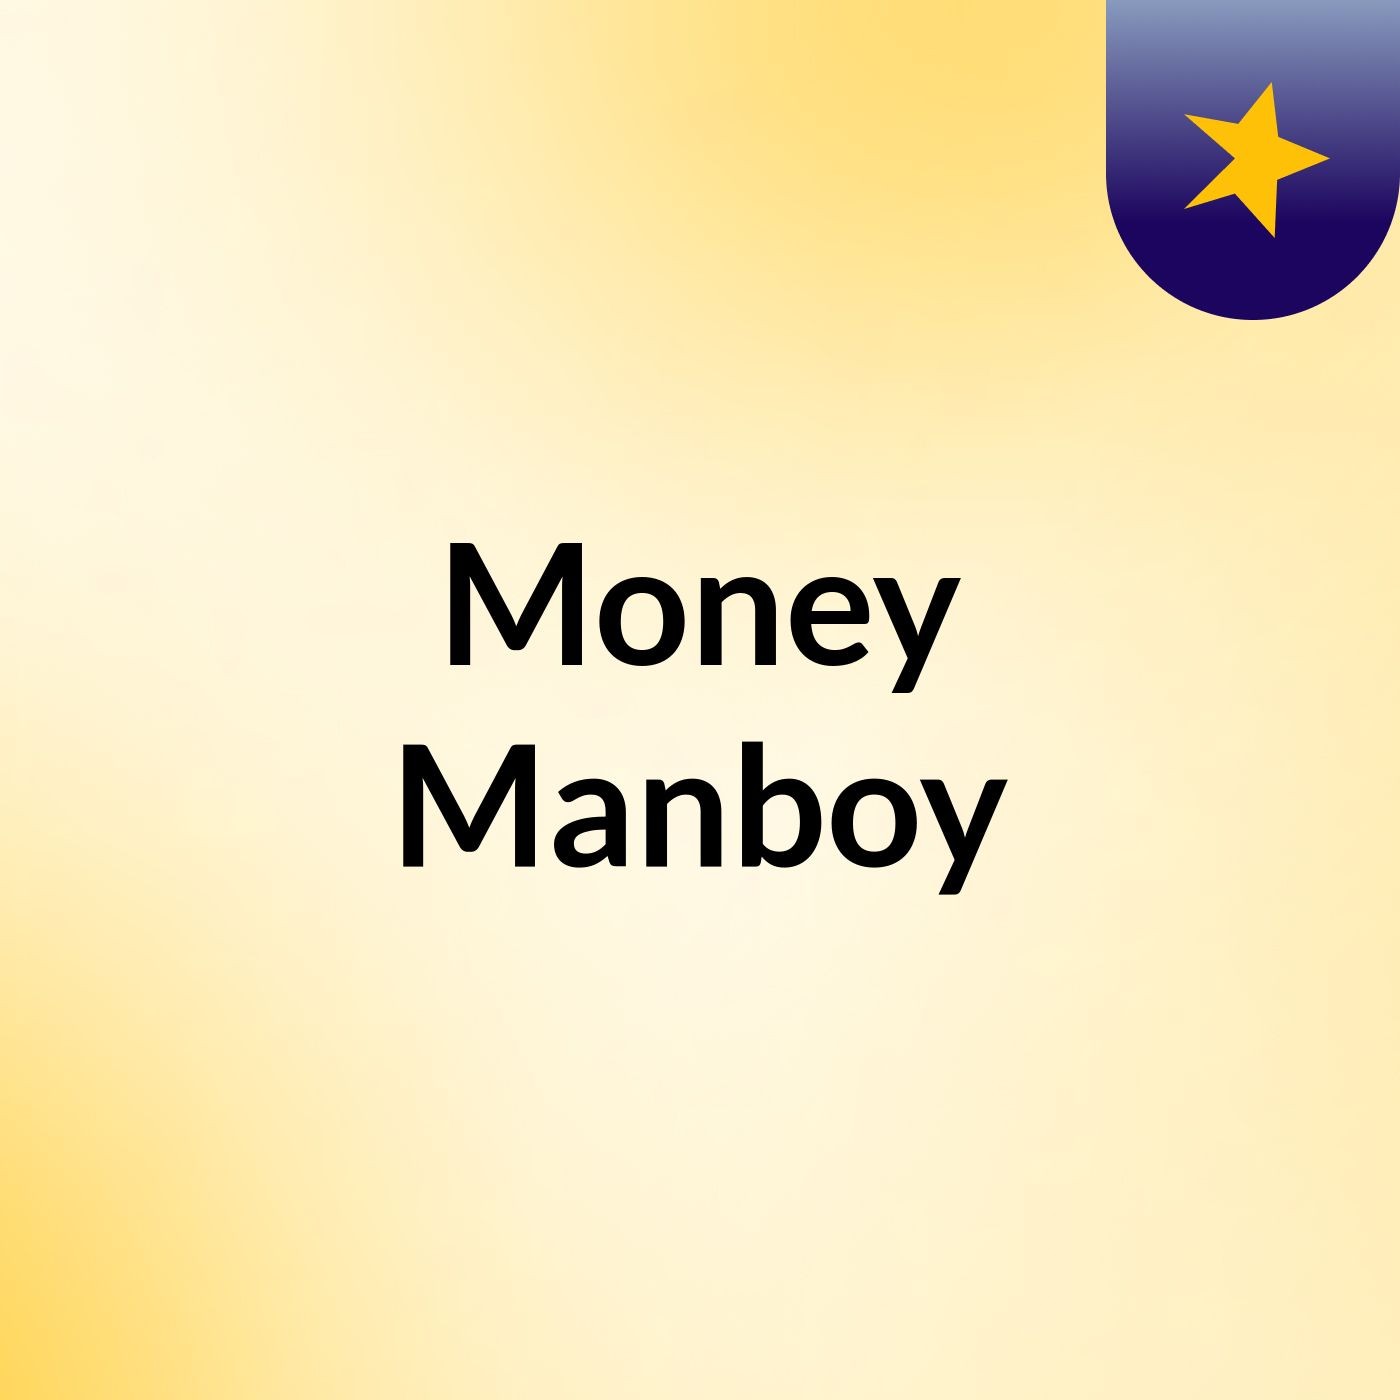 Money Manboy